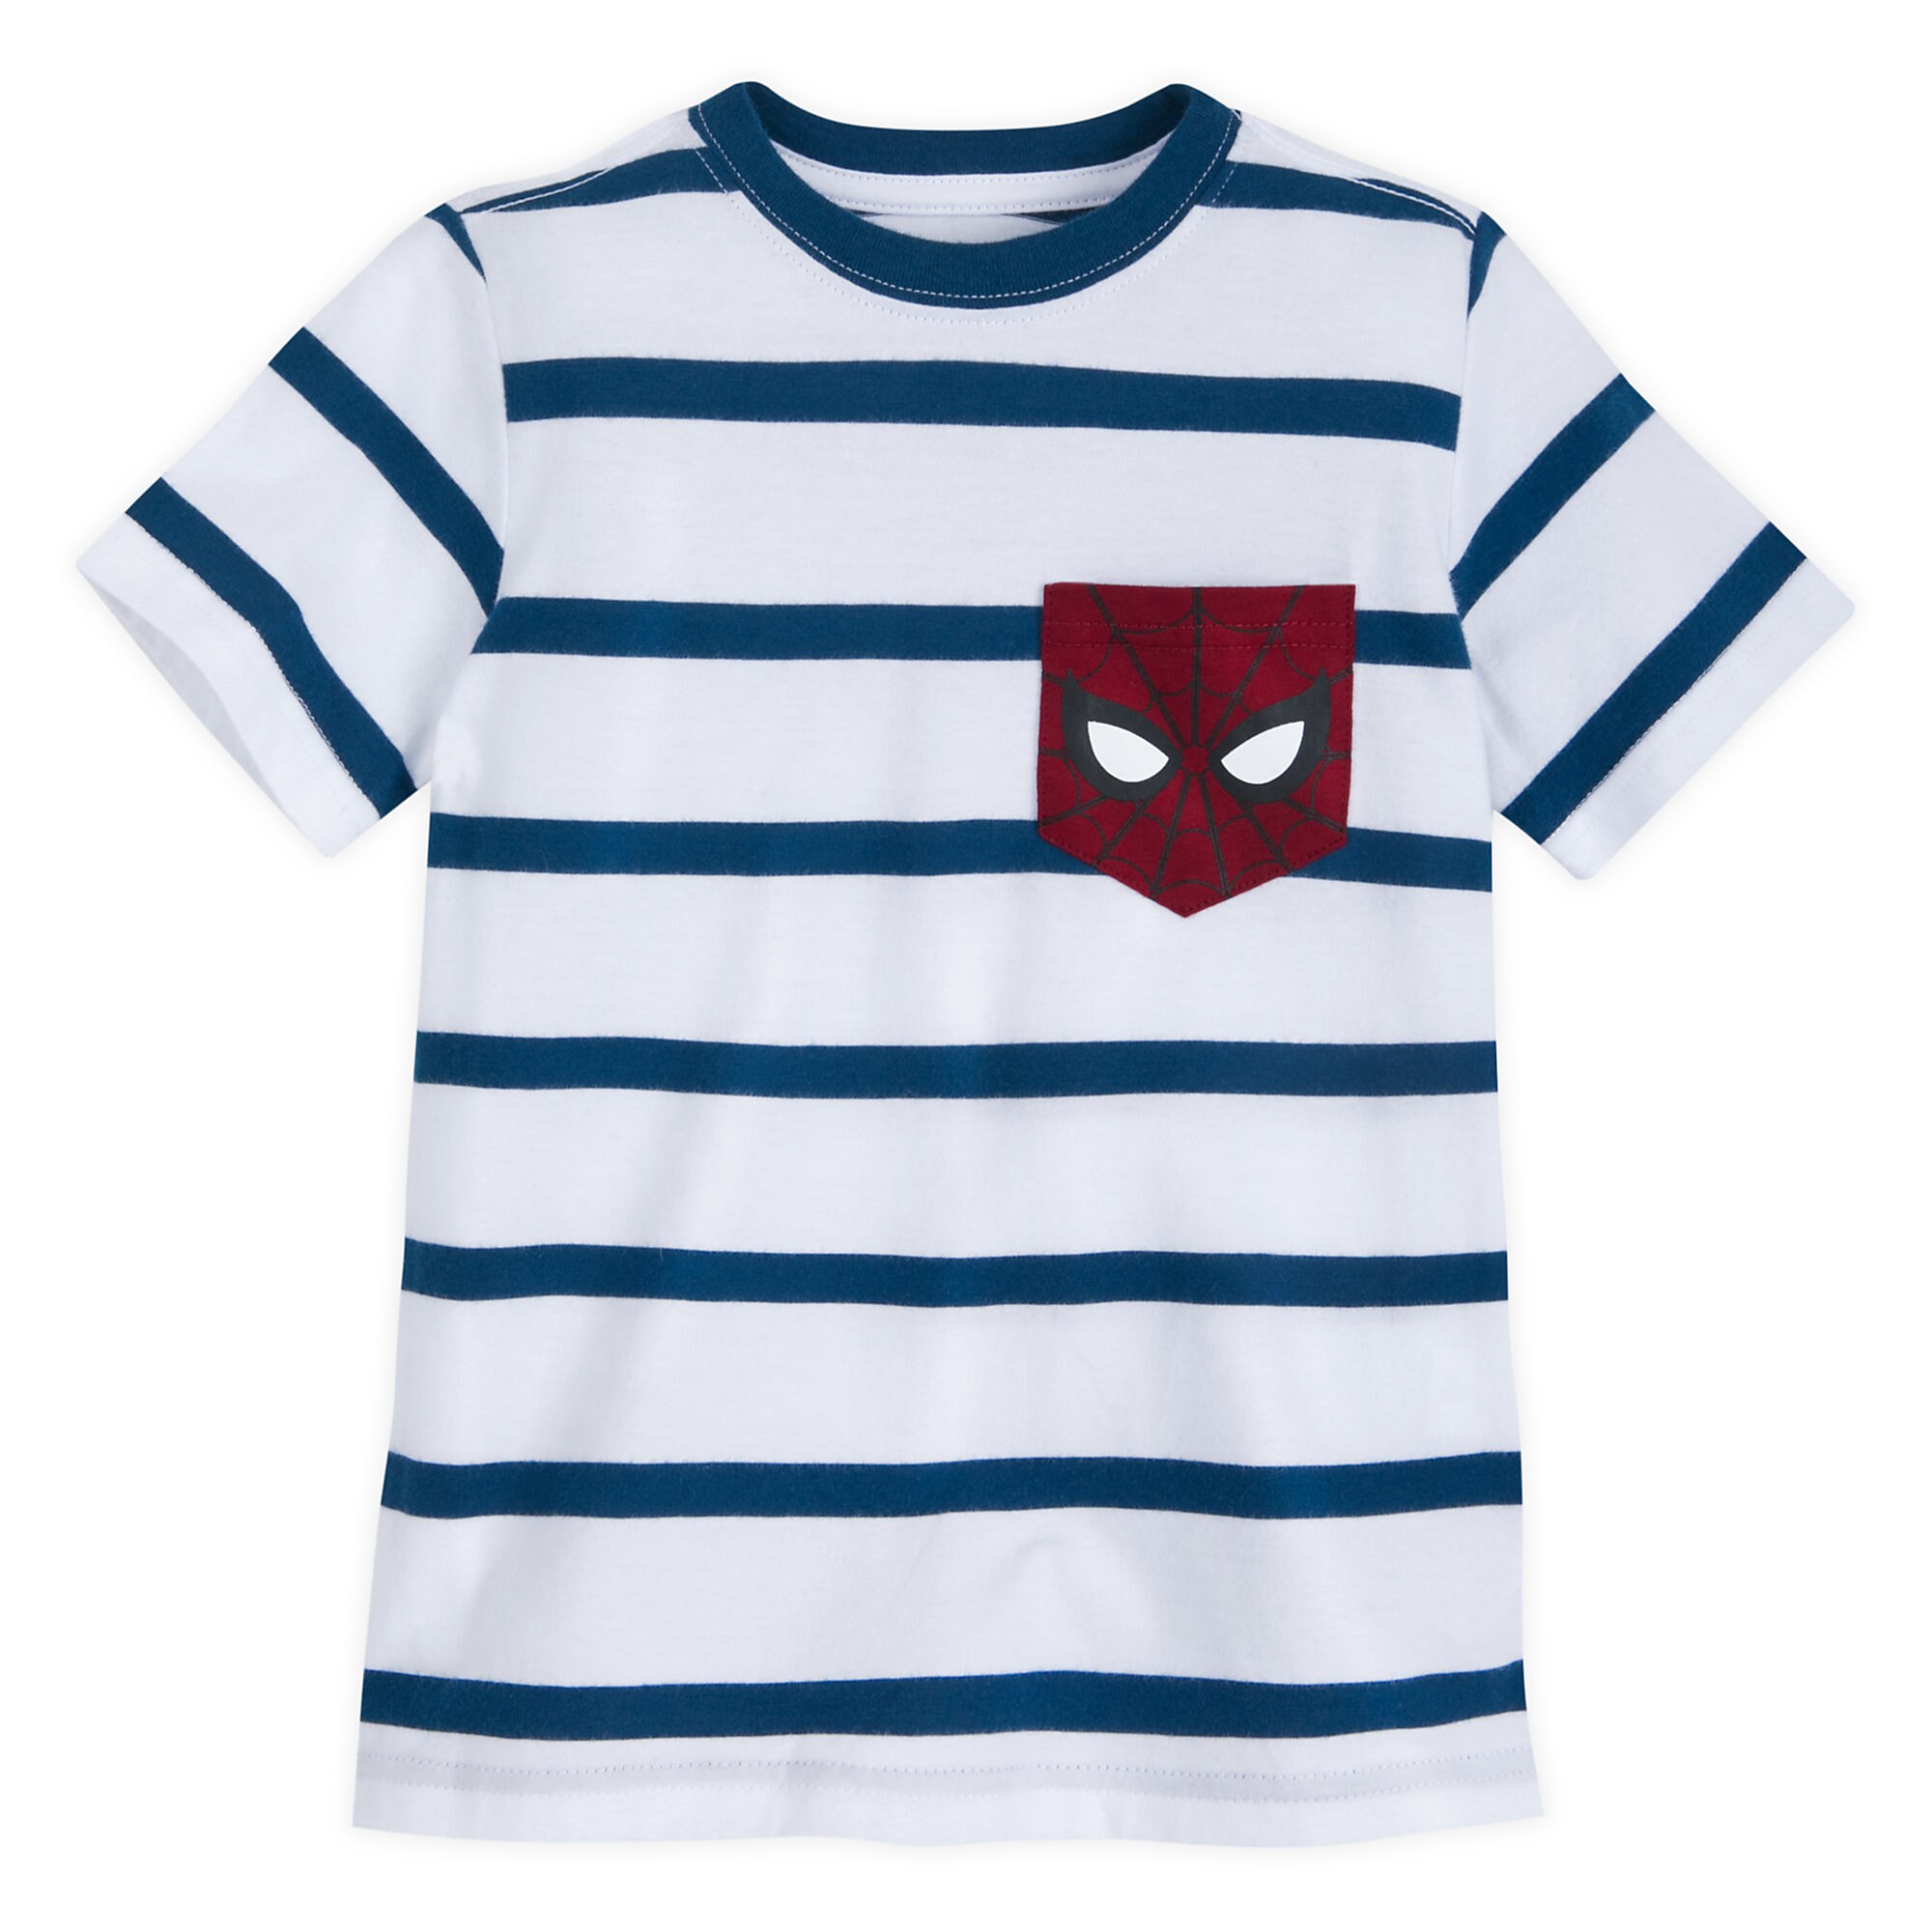 Spider-Man Striped T-Shirt for Kids